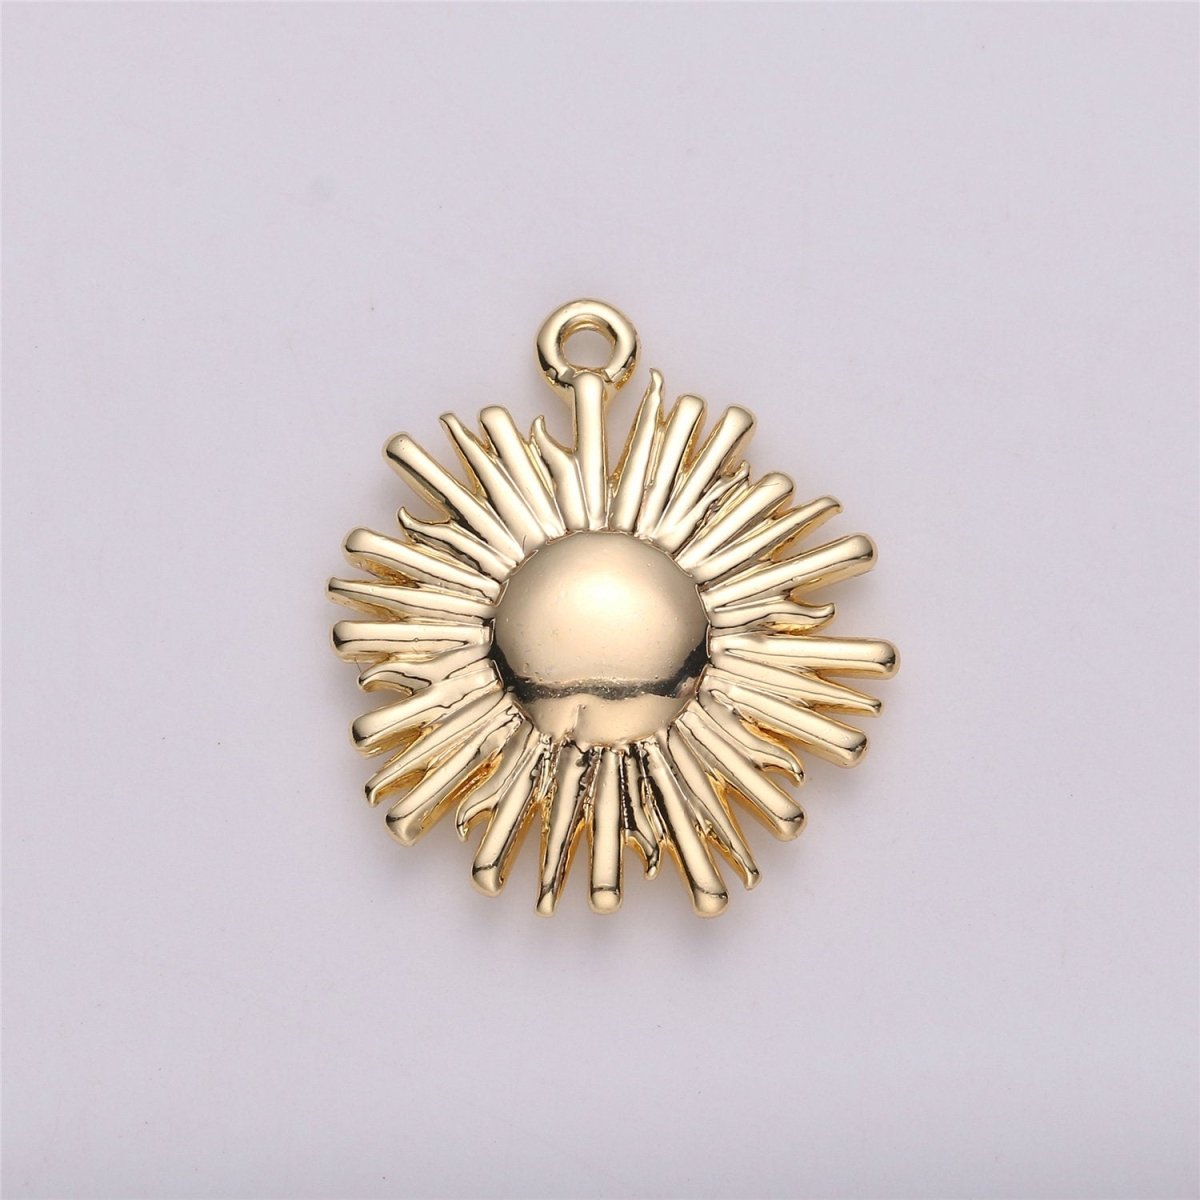 Gold Filled Sunshine Charm / Dainty Sun Charm / Sunburst Pendant / You Are My Sunshine / Celestial Sun Charm for Bracelet Necklace EarringC-537 - DLUXCA